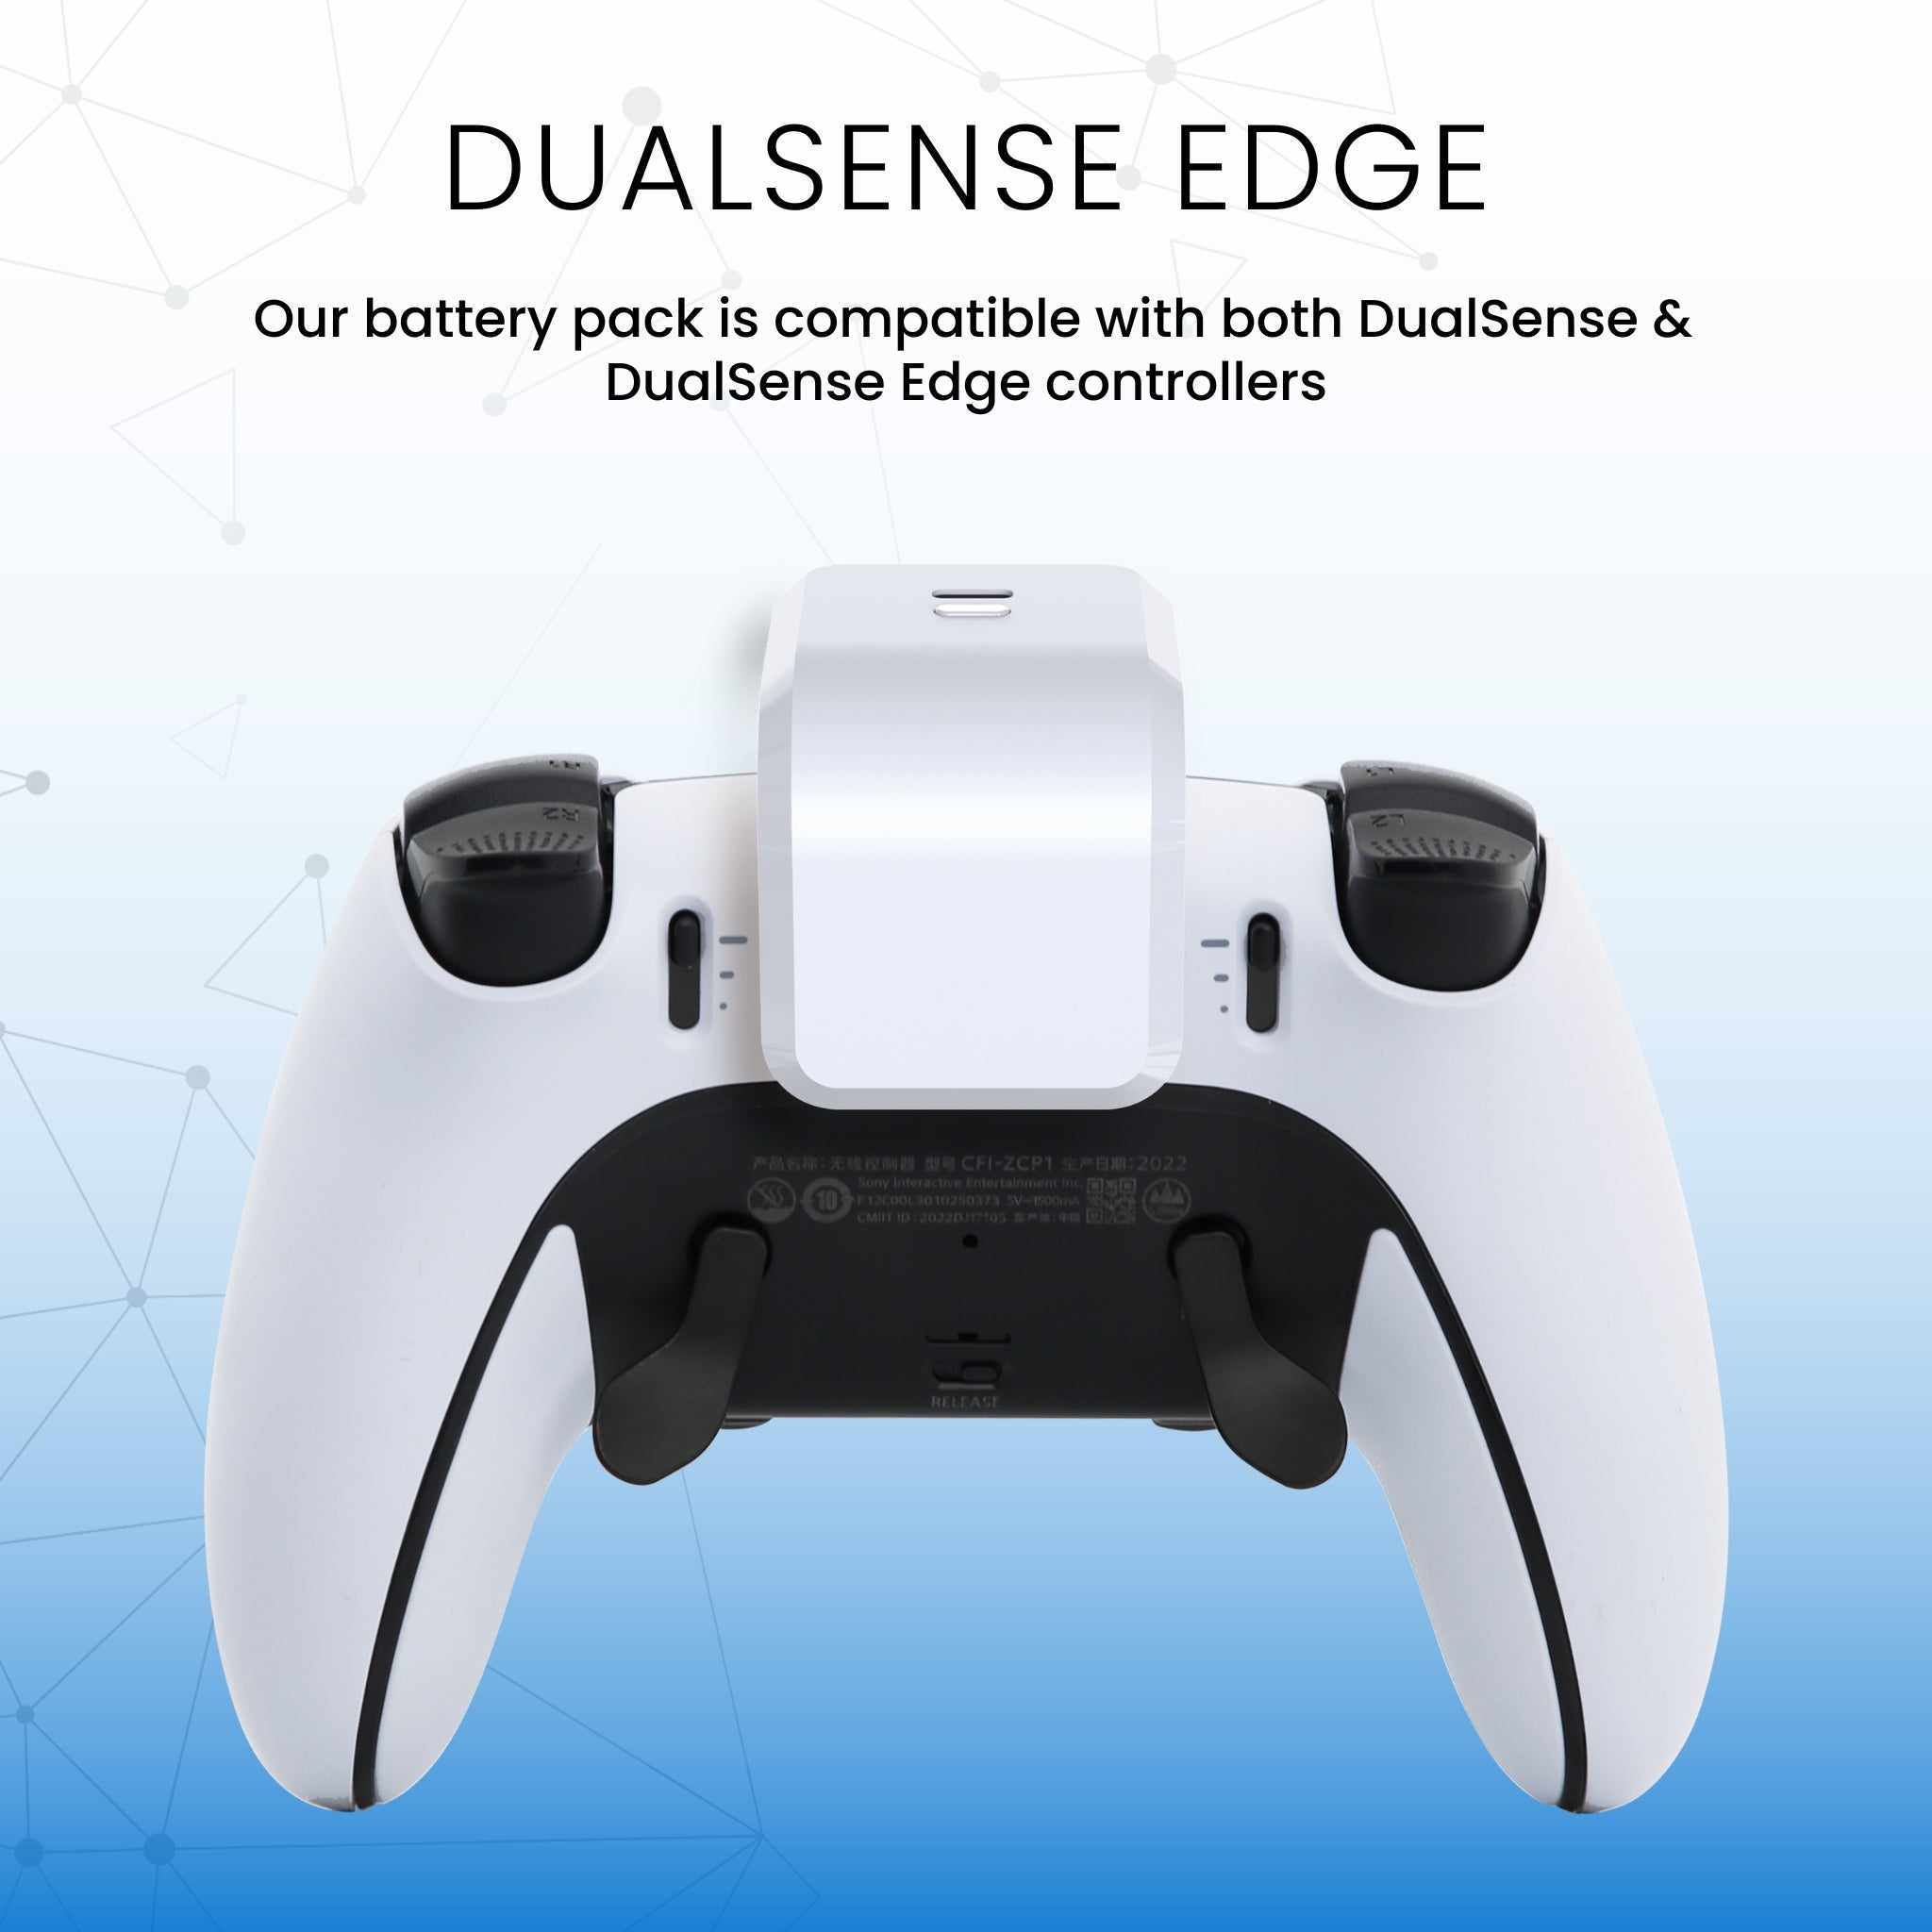 PowerPack 2.0 (DualSense Edge Compatiable)